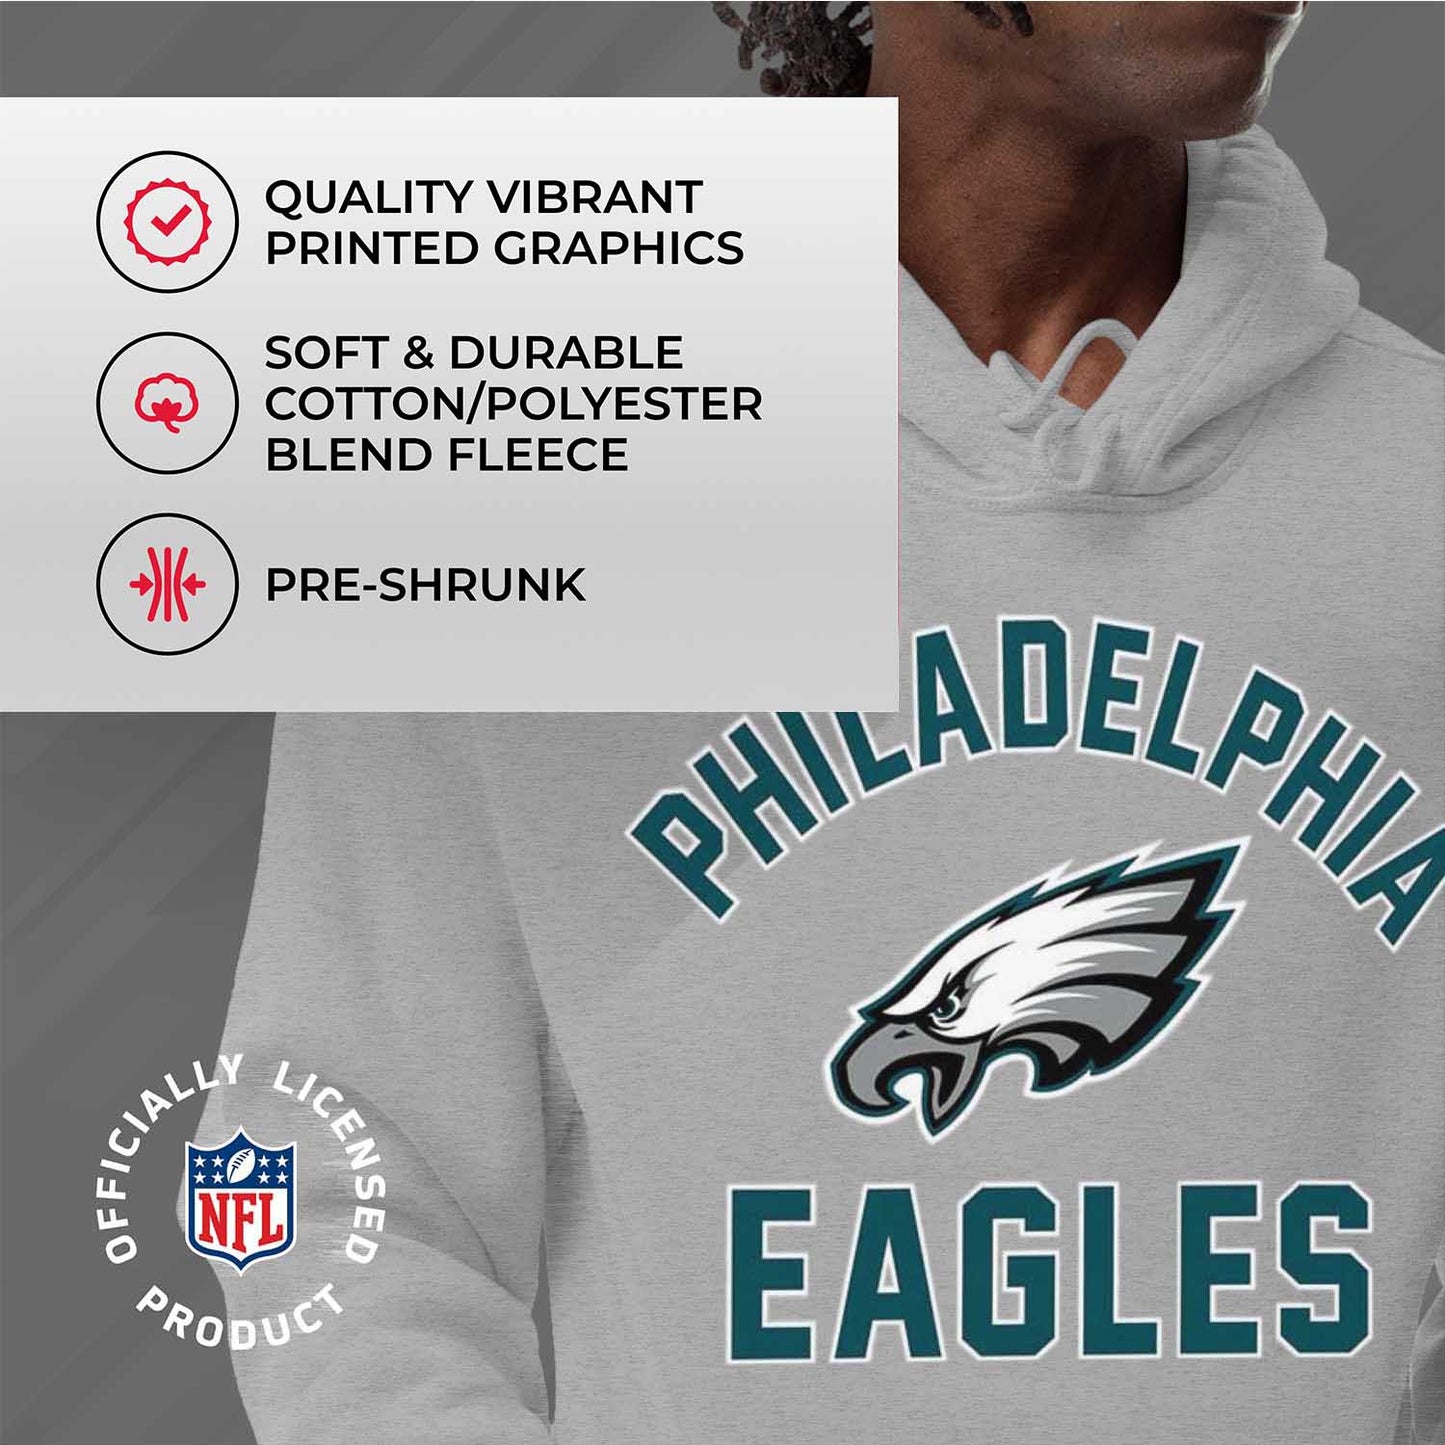 Philadelphia Eagles NFL Adult Gameday Hooded Sweatshirt - Gray